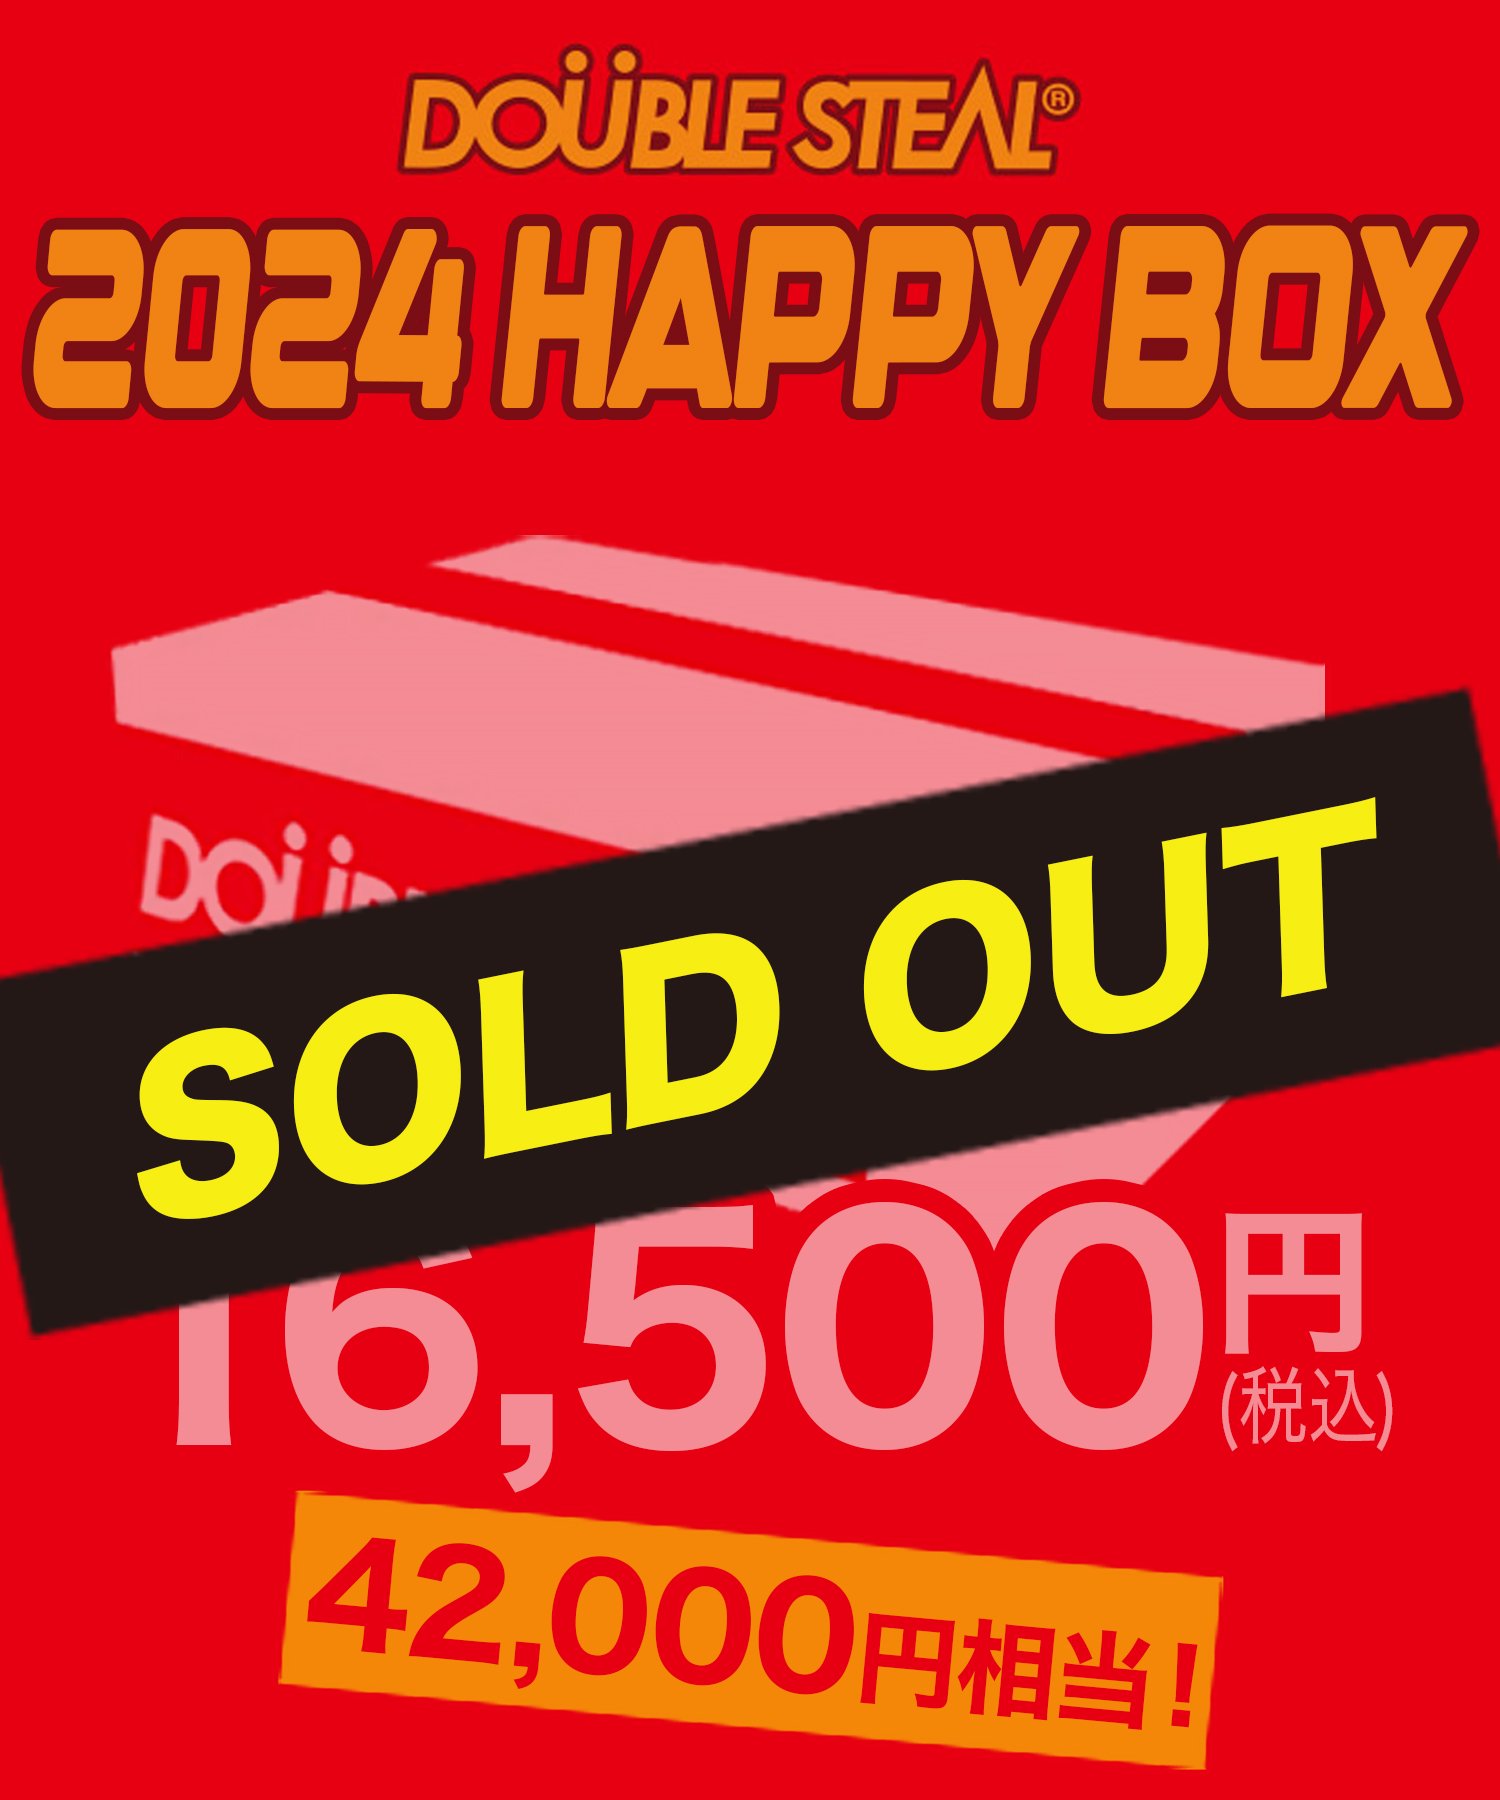 2023 HAPPY BOX